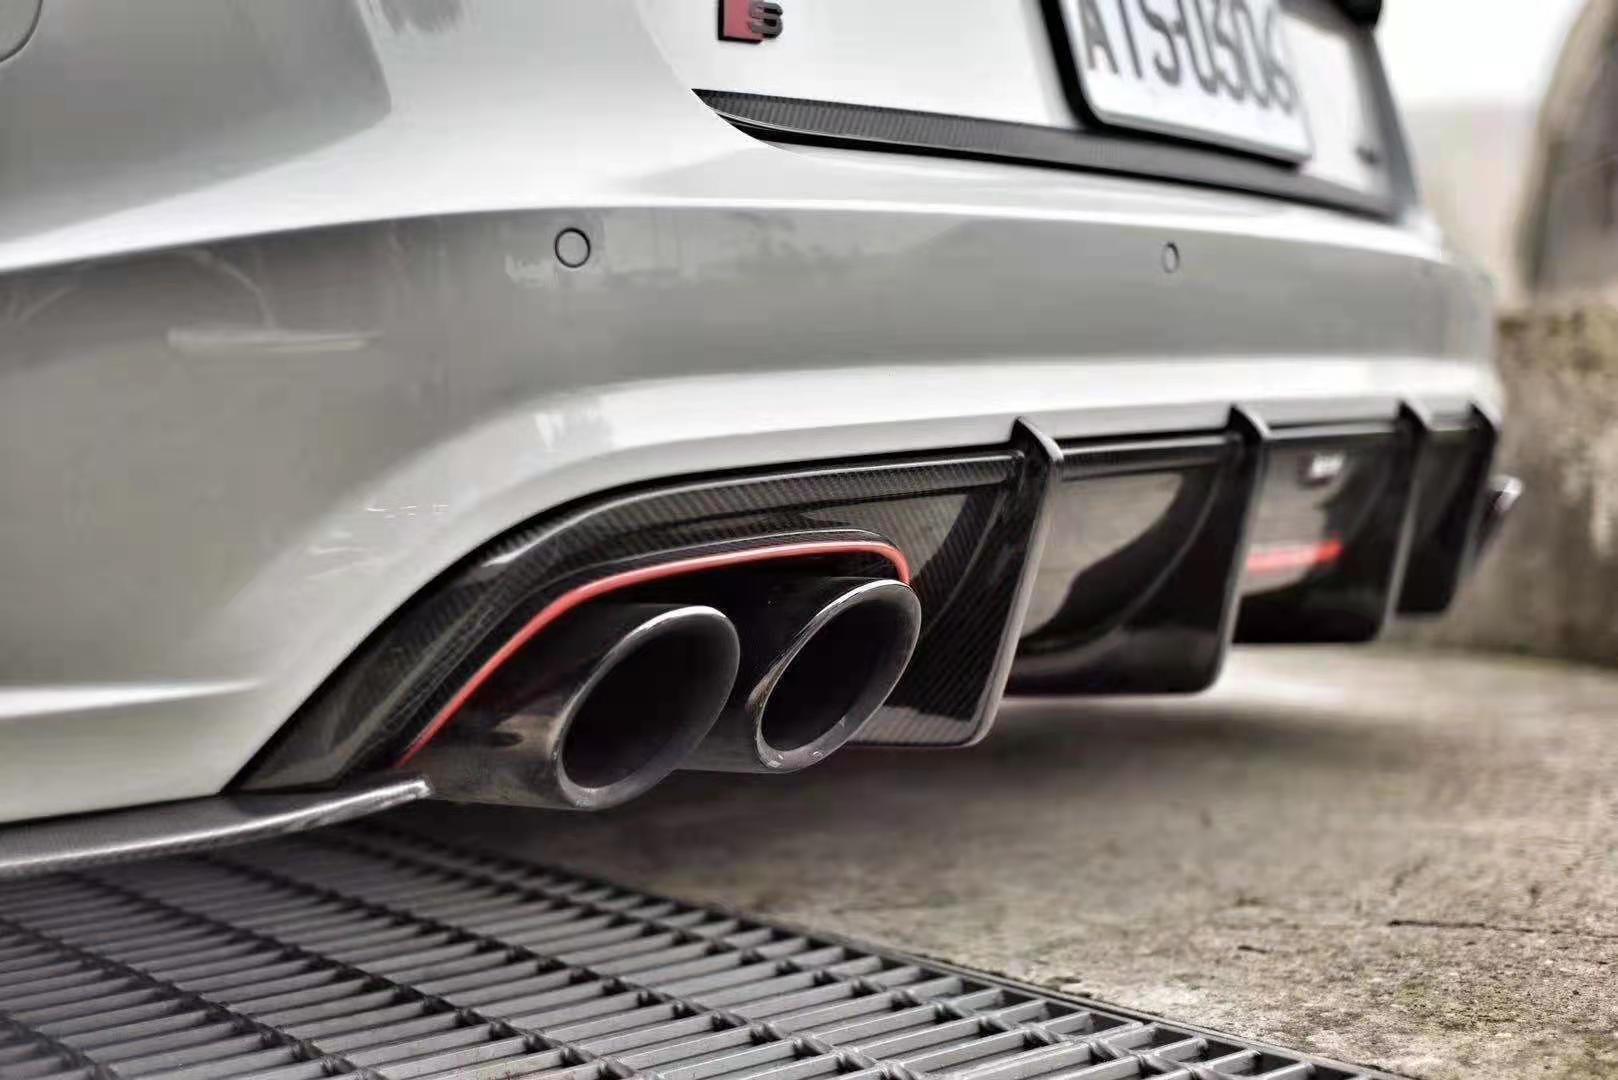 Karbel Carbon Dry Carbon Fiber Rear Diffuser for Audi S6 & A6 S-Line & A6 Avant 2016-2018 C7.5